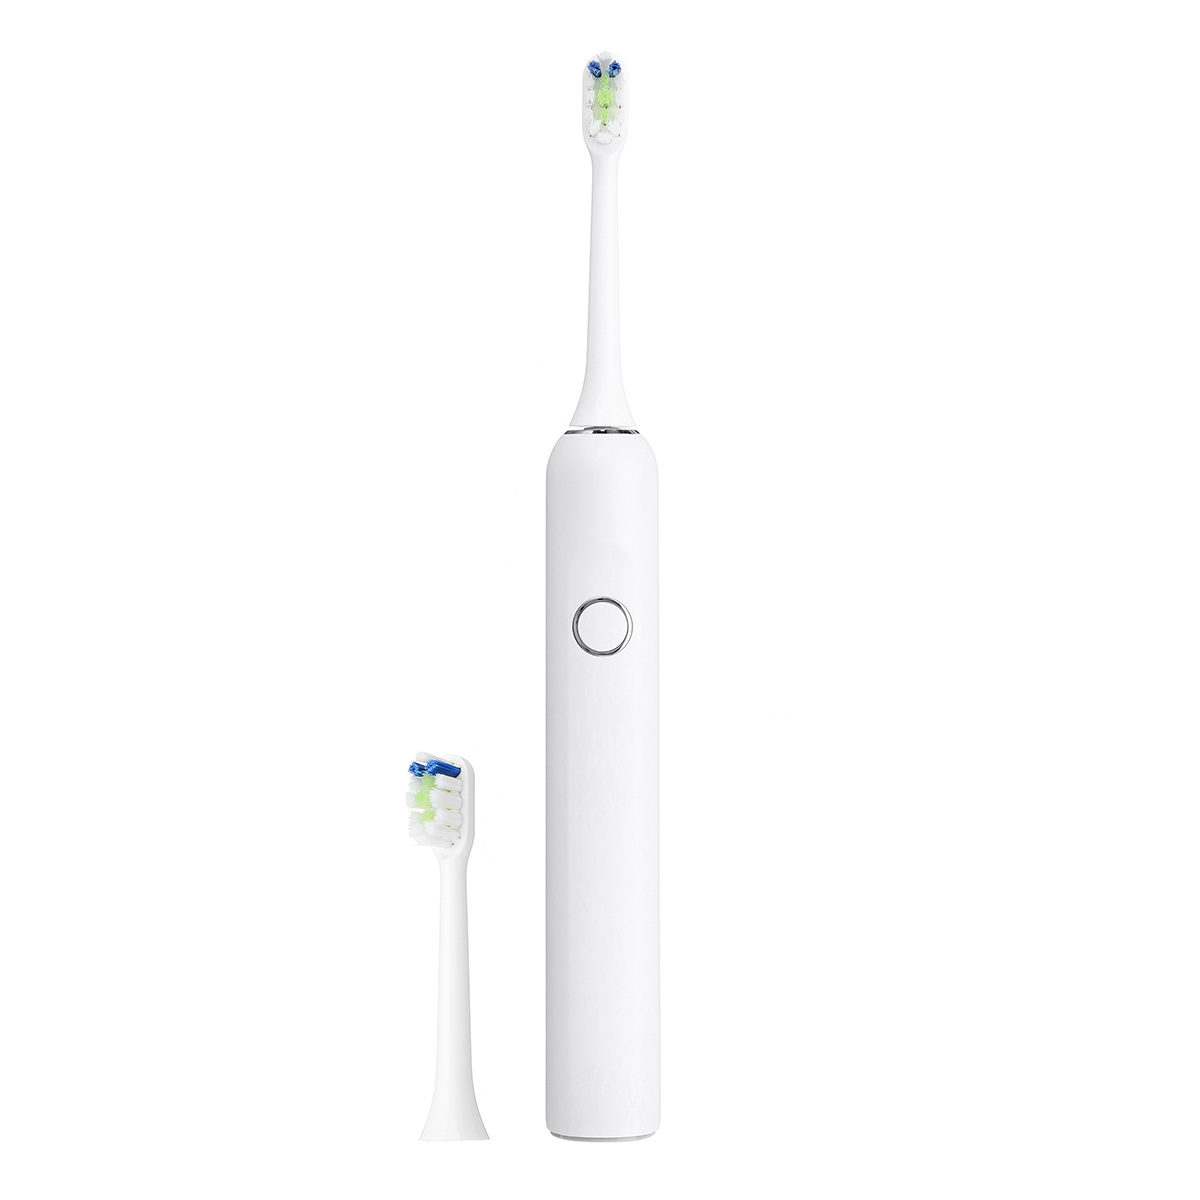 Waterproof-Rechargeable-Sonic-Electrric-Toothbrush-Upgraded-Ultrasonic-Electric-Toothbrush-1361114-6